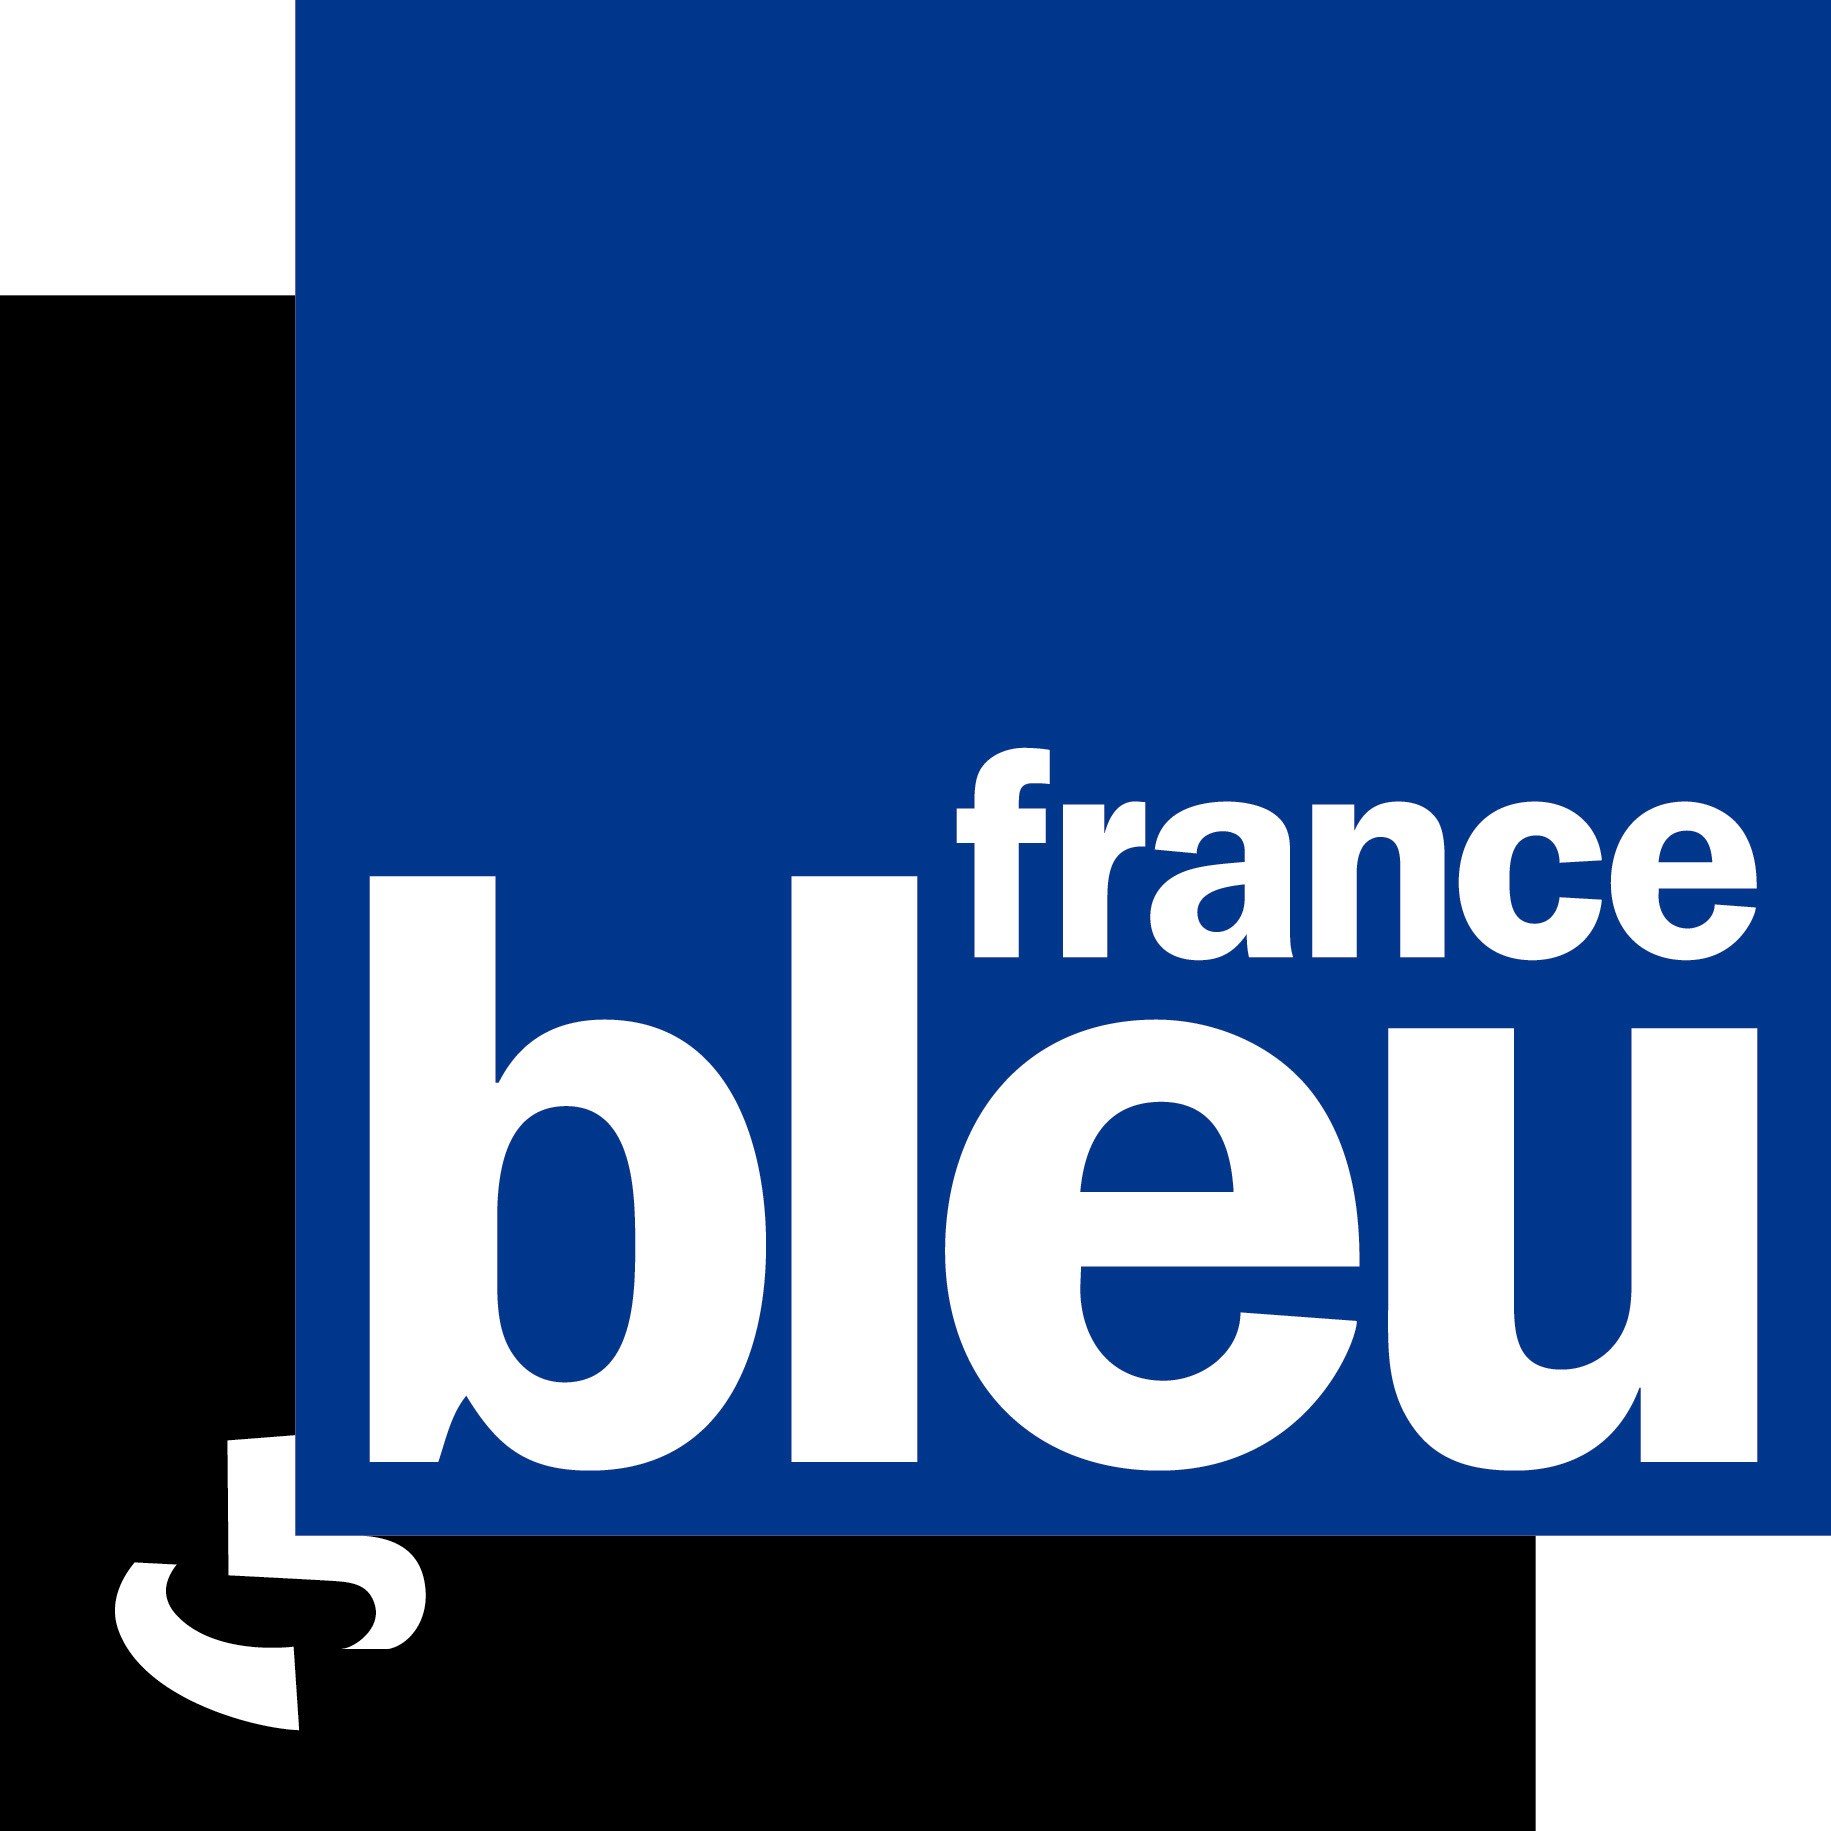 logo_France-bleu_Edilivre